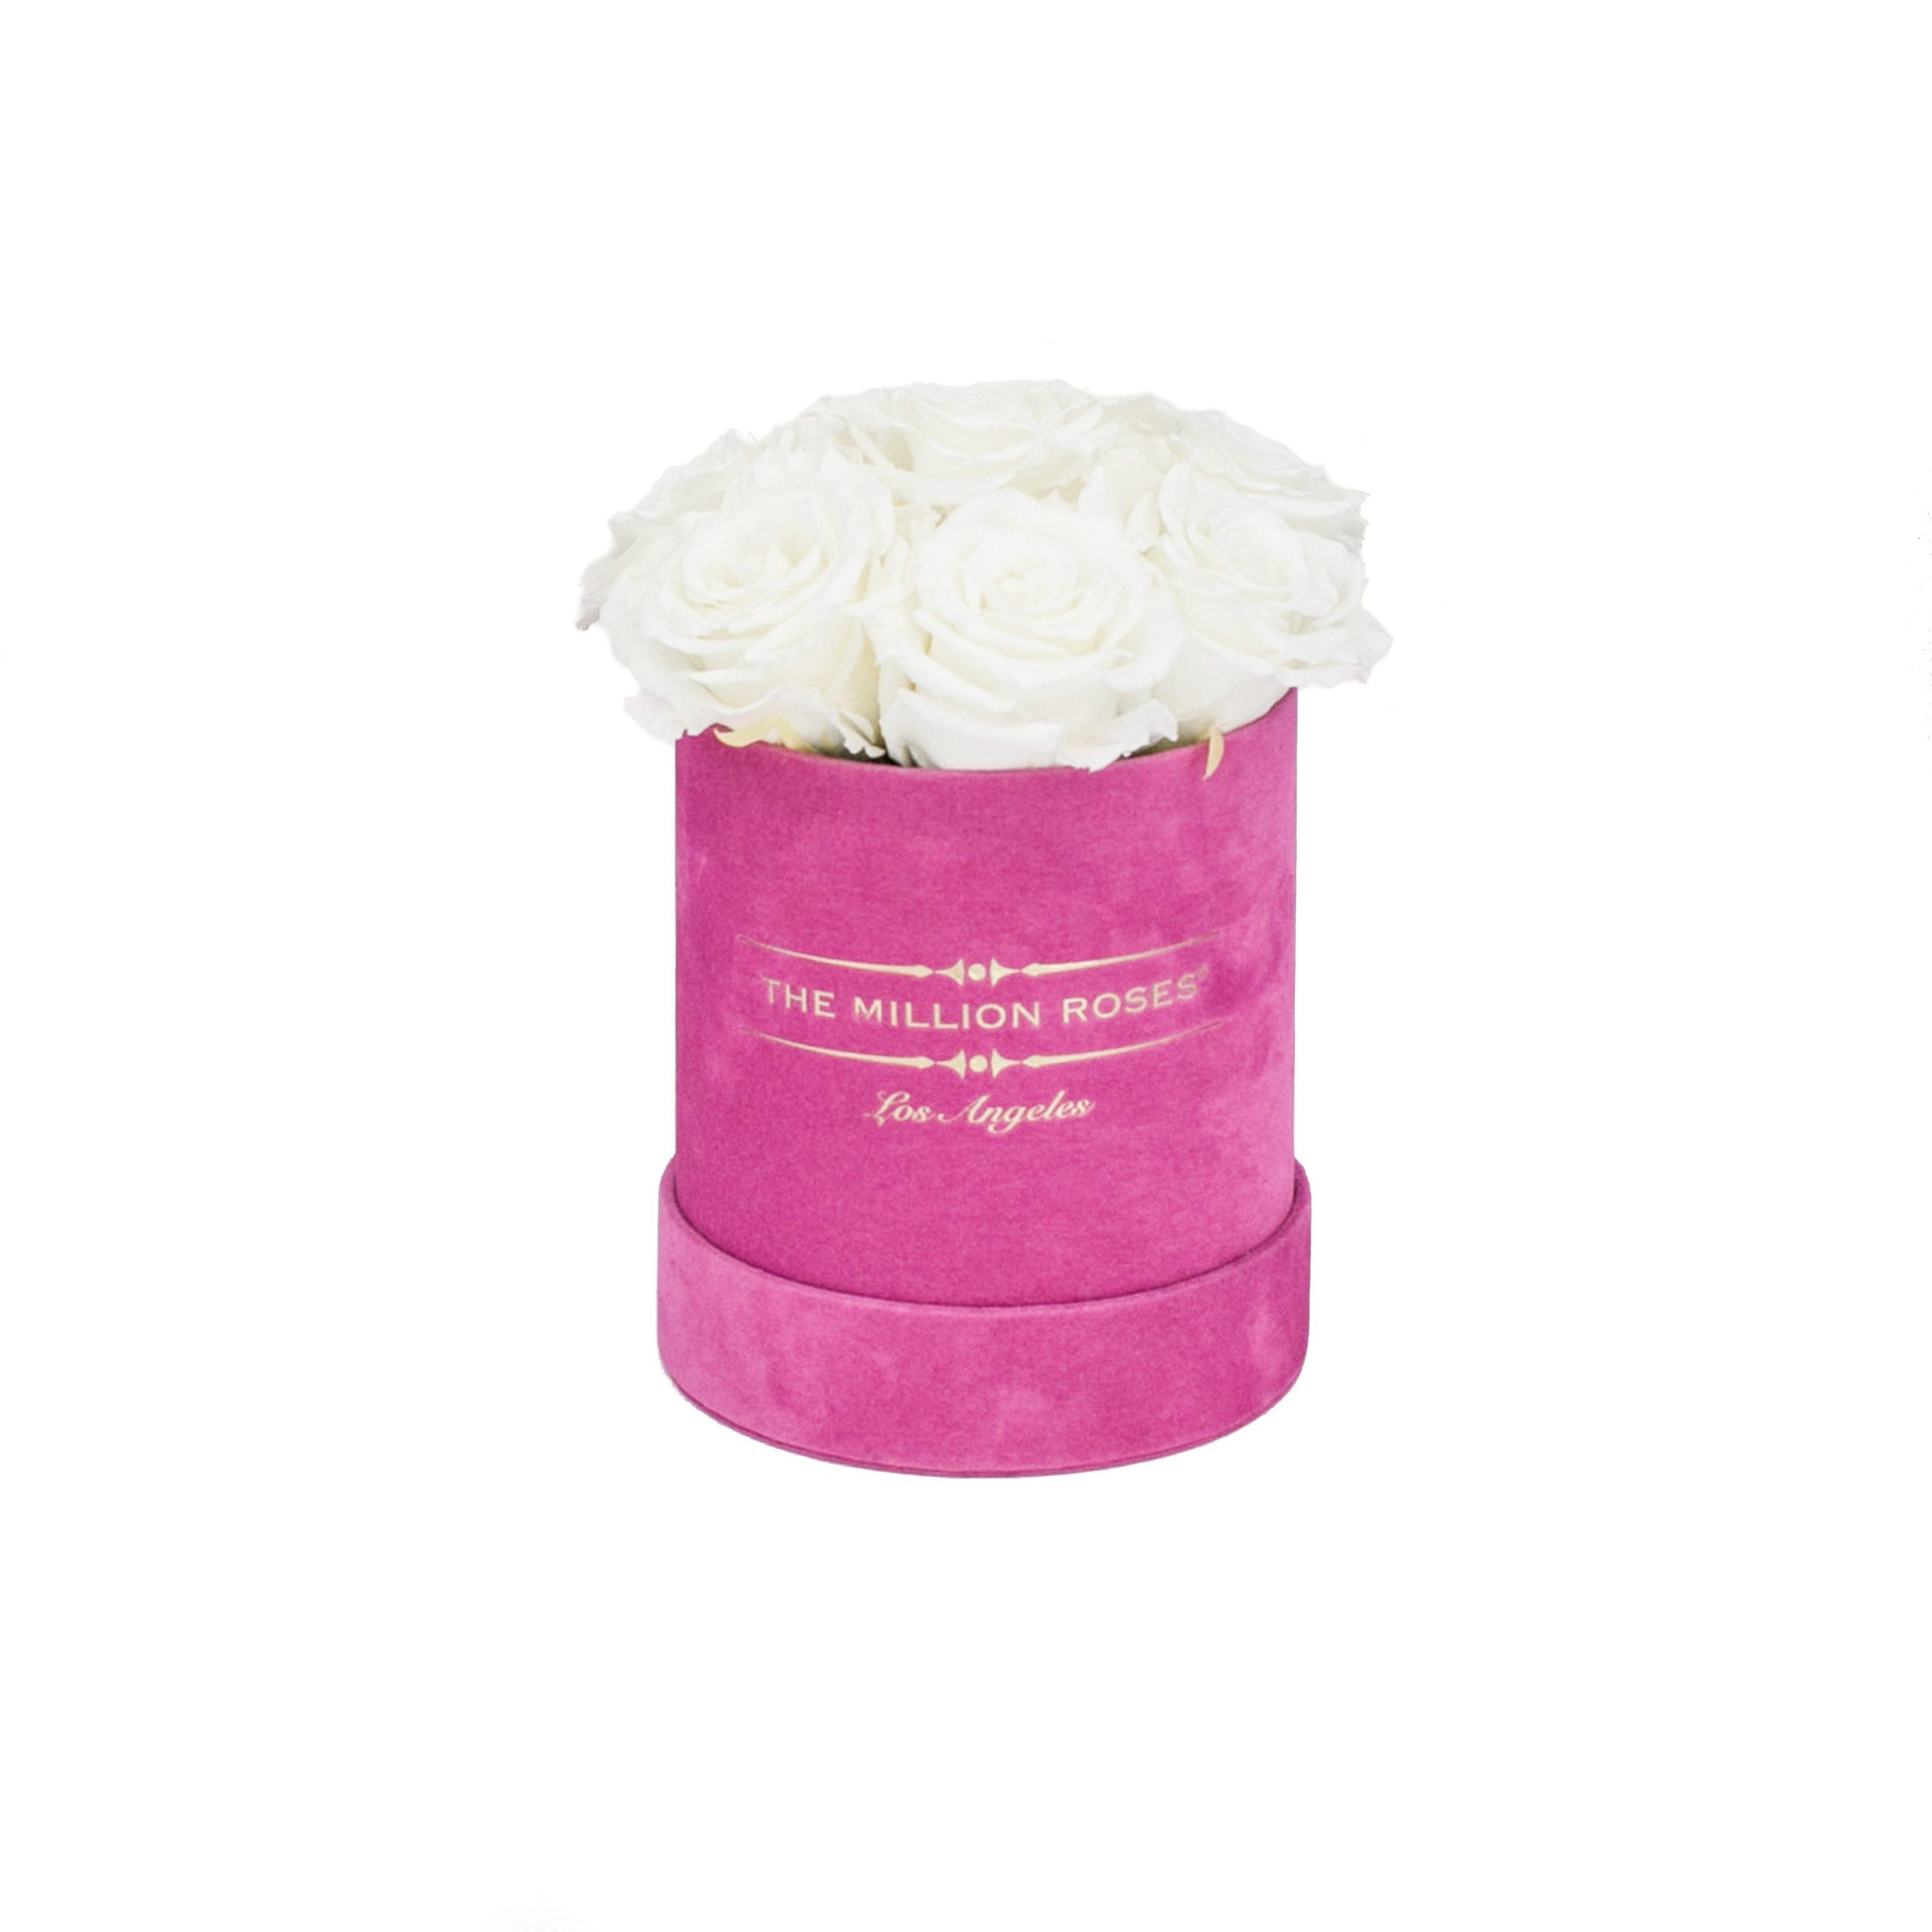 basic round box+ - hot-pink suede box - white roses white eternity roses - the million roses